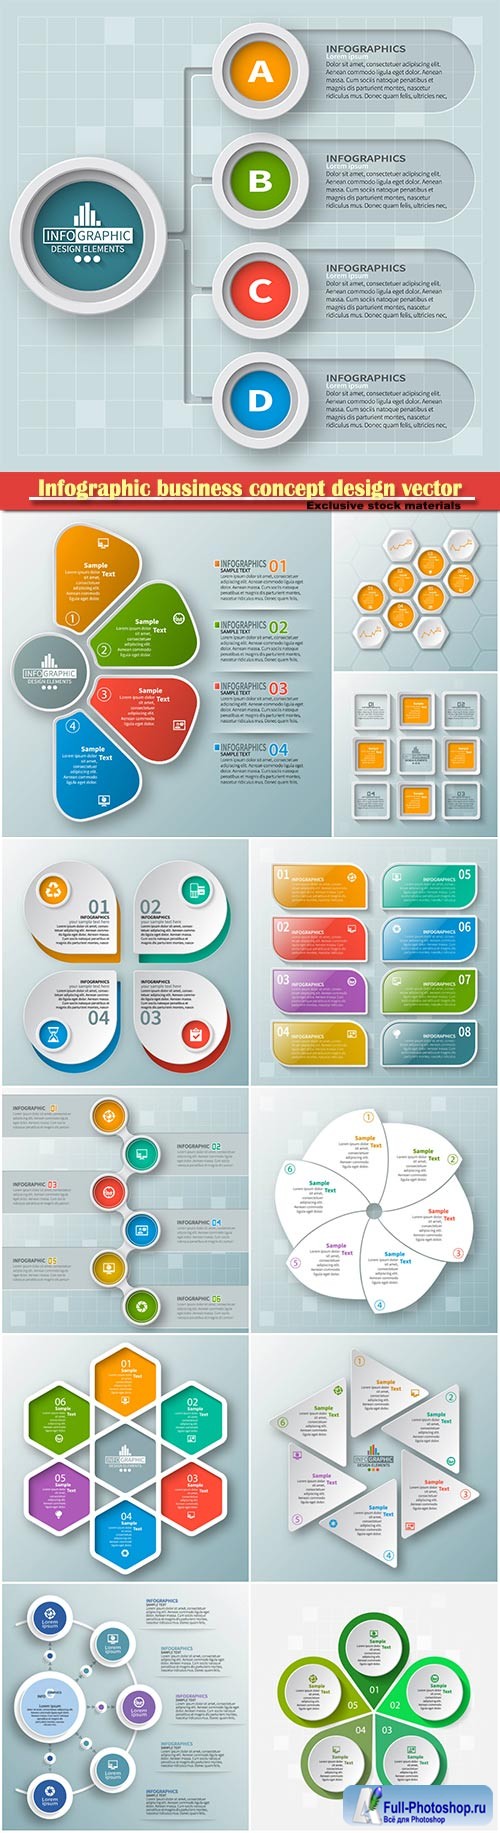 Infographic business concept design vector illustration # 6